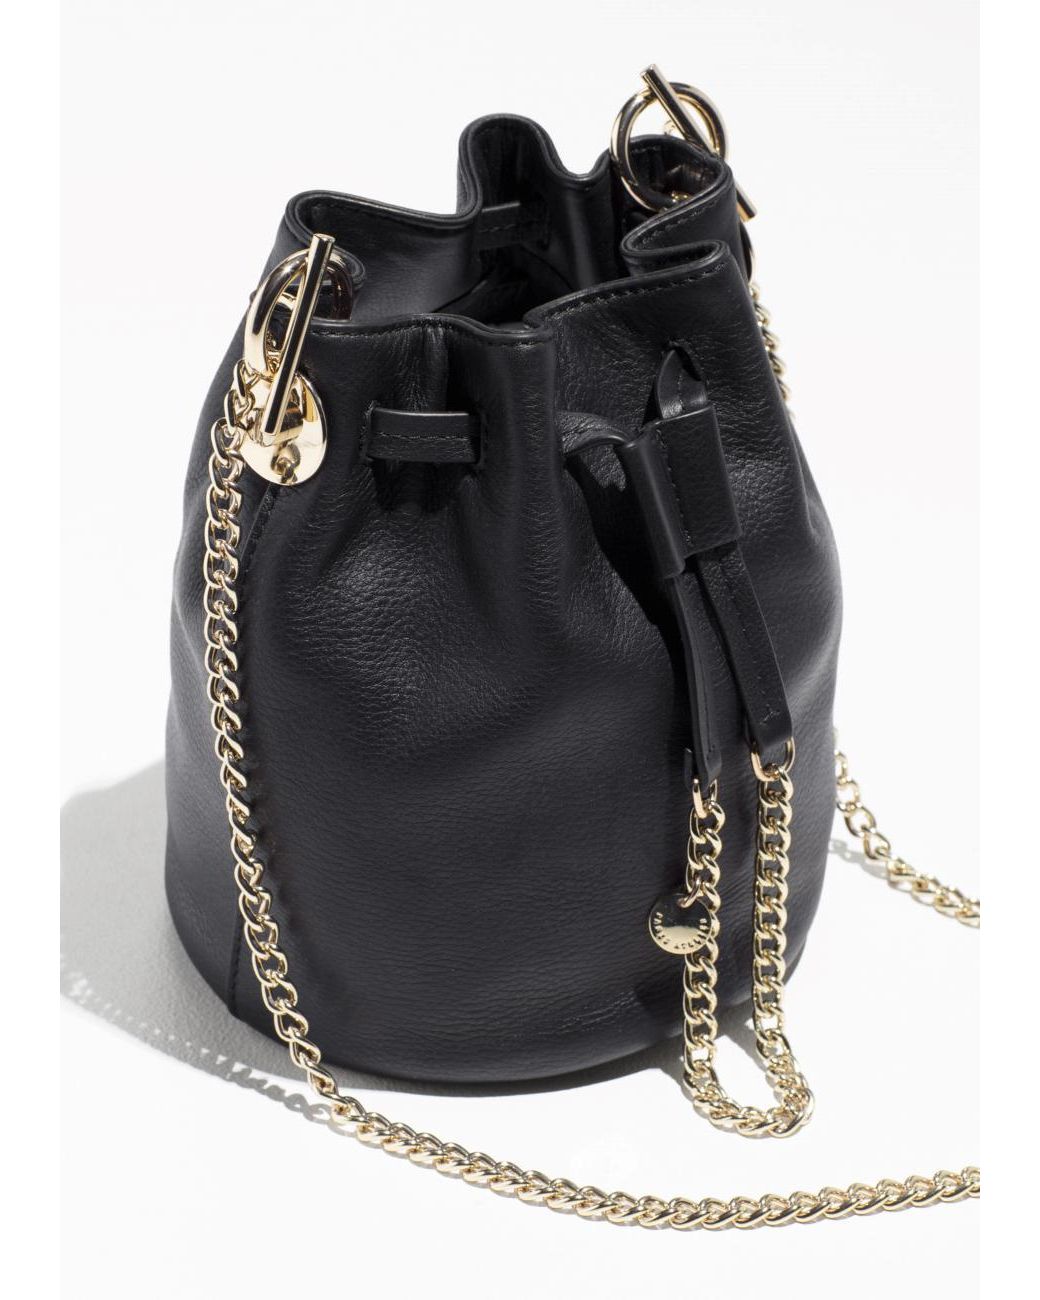 Black Wetlook Leather Handbag Leather Bucket Bag With Chains 